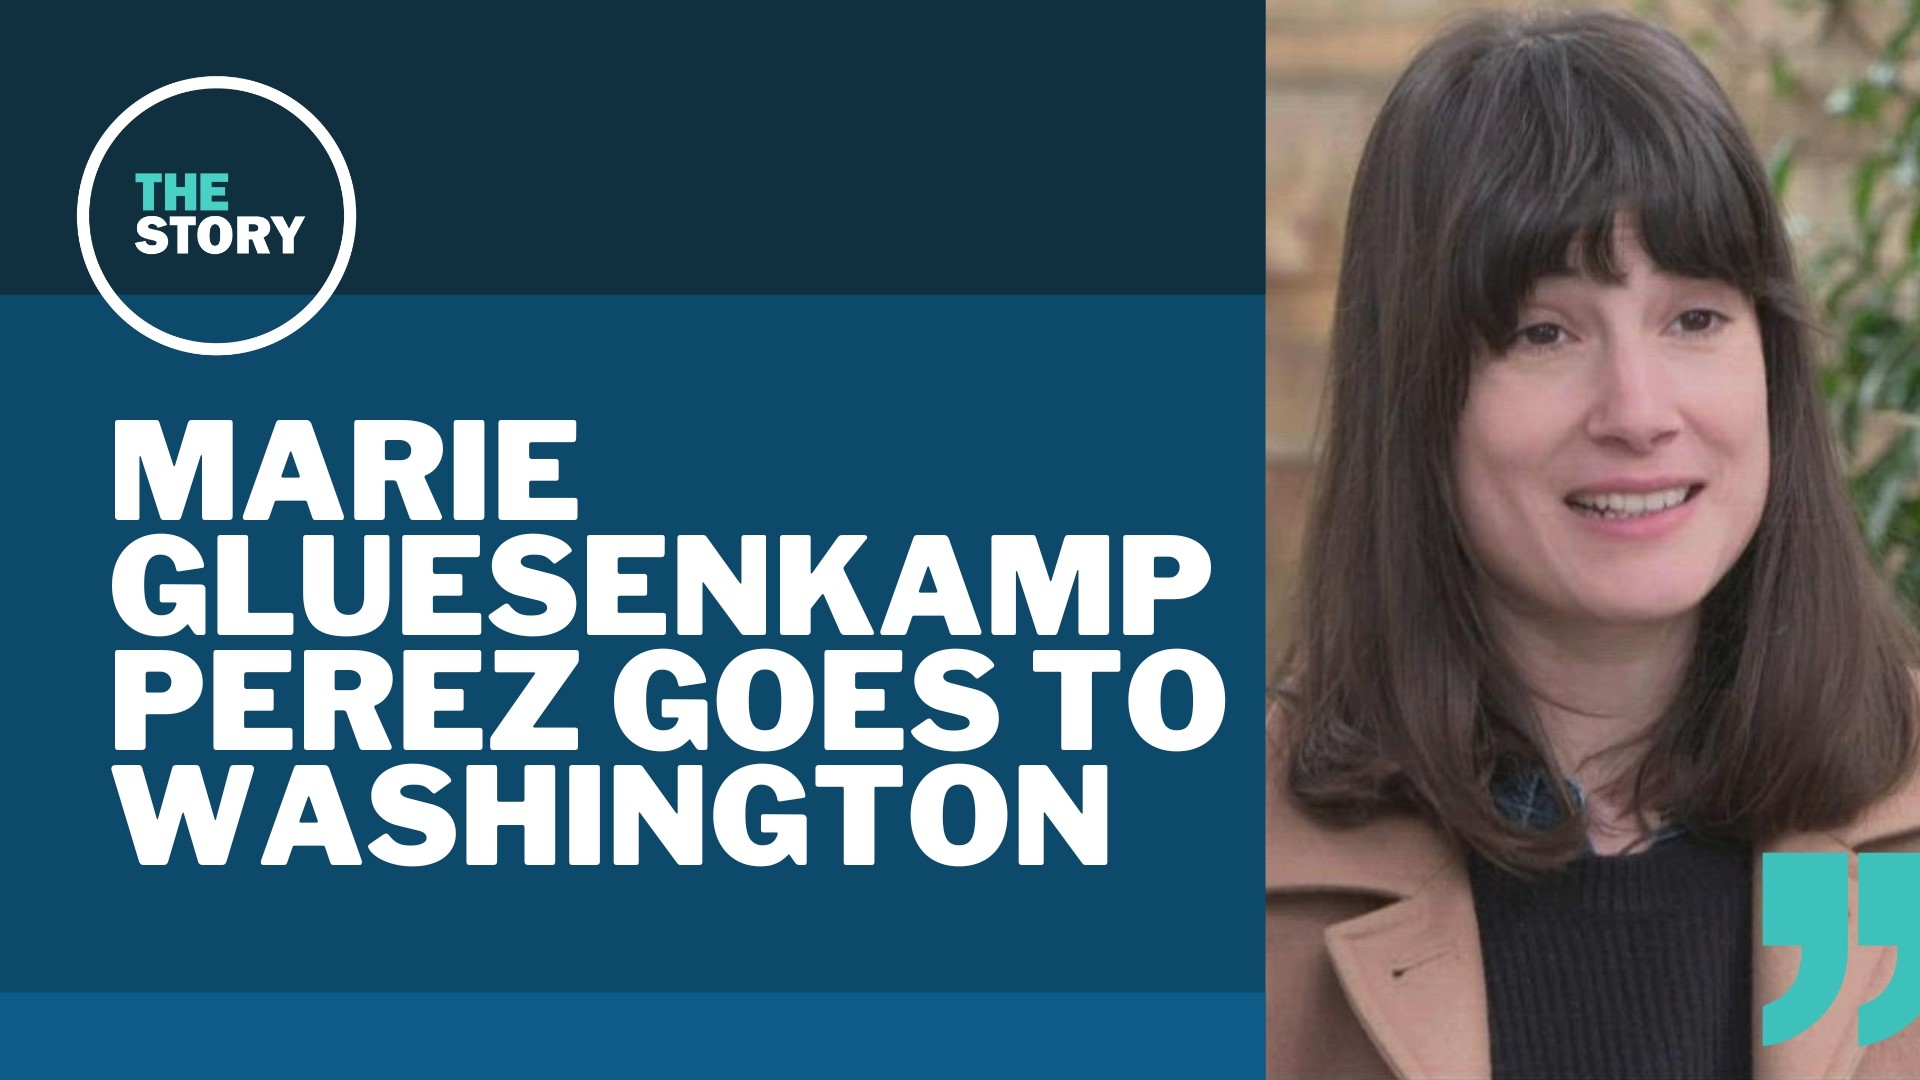 Gluesenkamp Perez flew out to D.C. for House orientation now that she’s the next Congresswoman for Washington’s 3rd District.